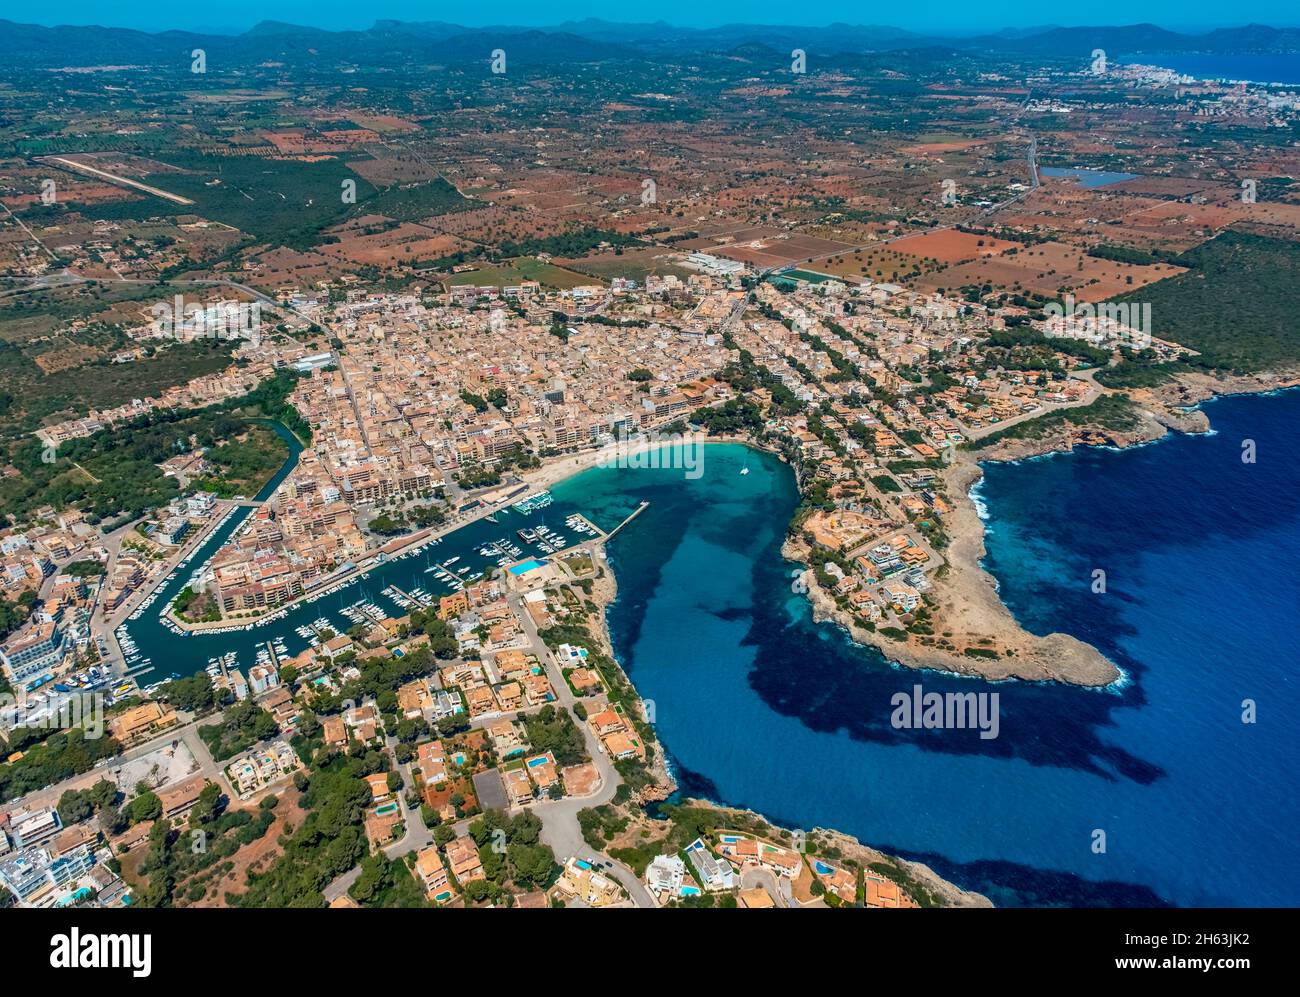 Luftbild, Strand und Yachthafen von porto cristo, manacor, mallorca, europa, balearen, spanien Stockfoto